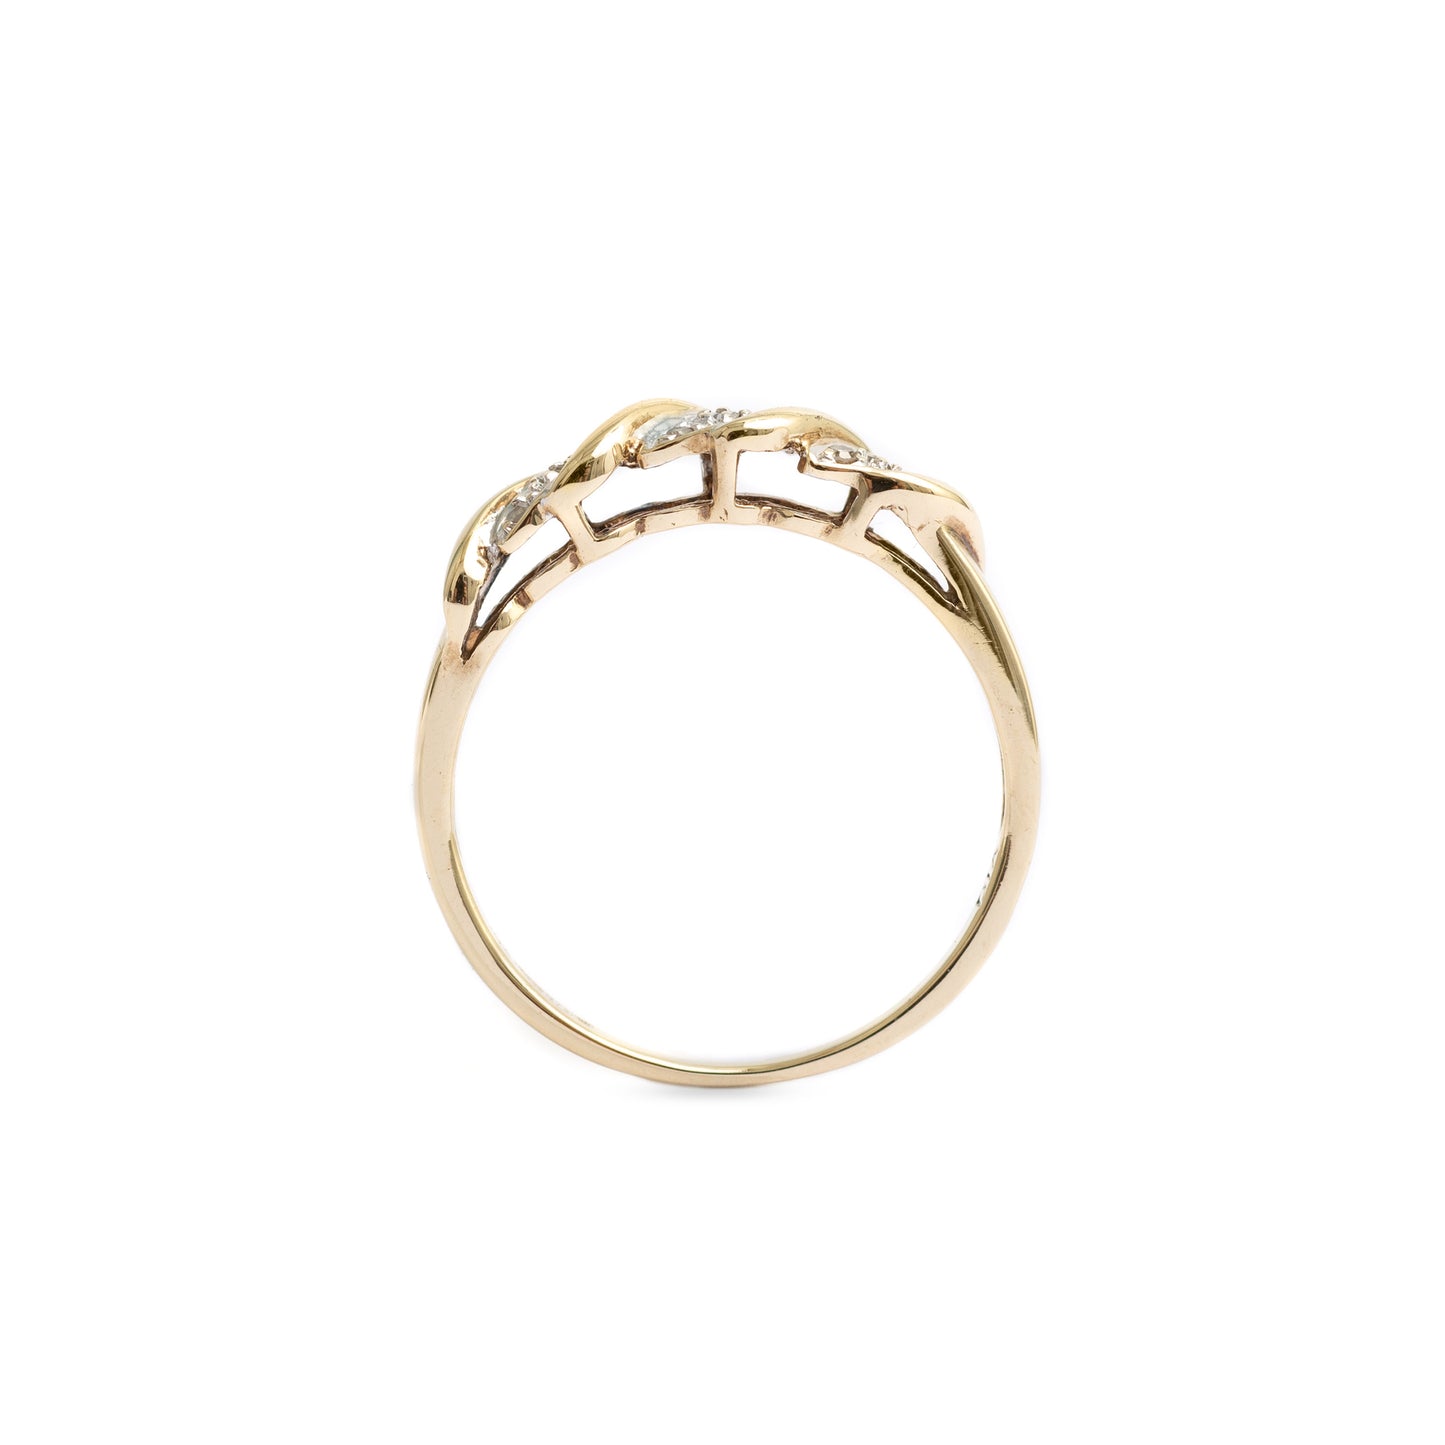 Ladies 9ct Gold Diamond Ring Twist Set With 9 Diamonds Size O  (Code A394)